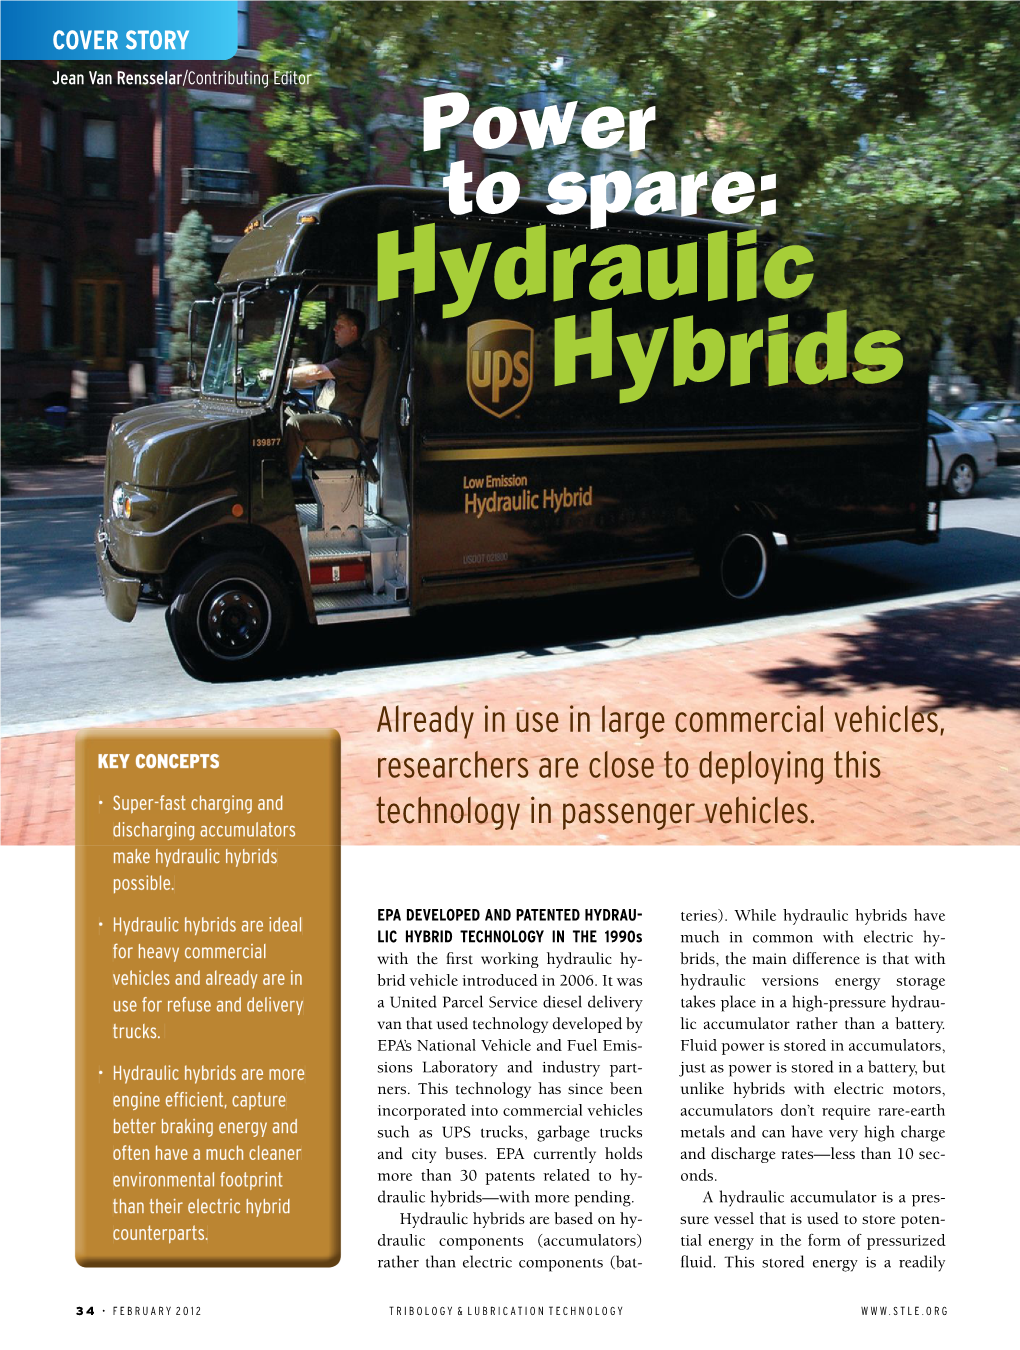 Power to Spare: Hydraulic Hybrids